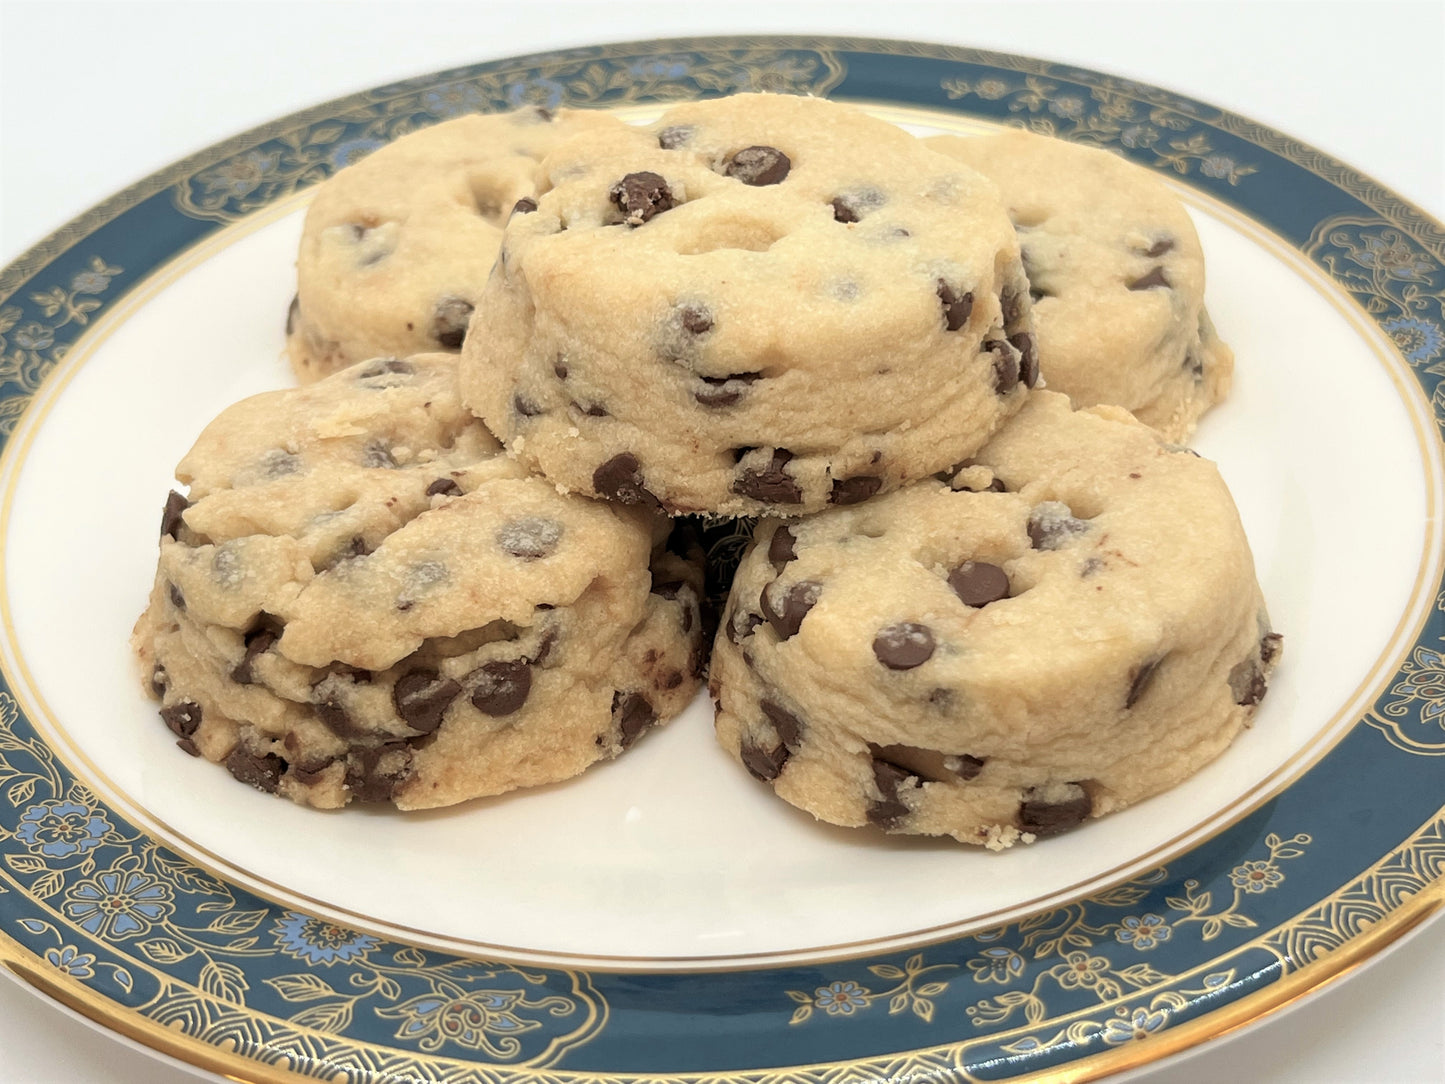 2. Chocolate Chip Shortbread Cookies - 12 cookies